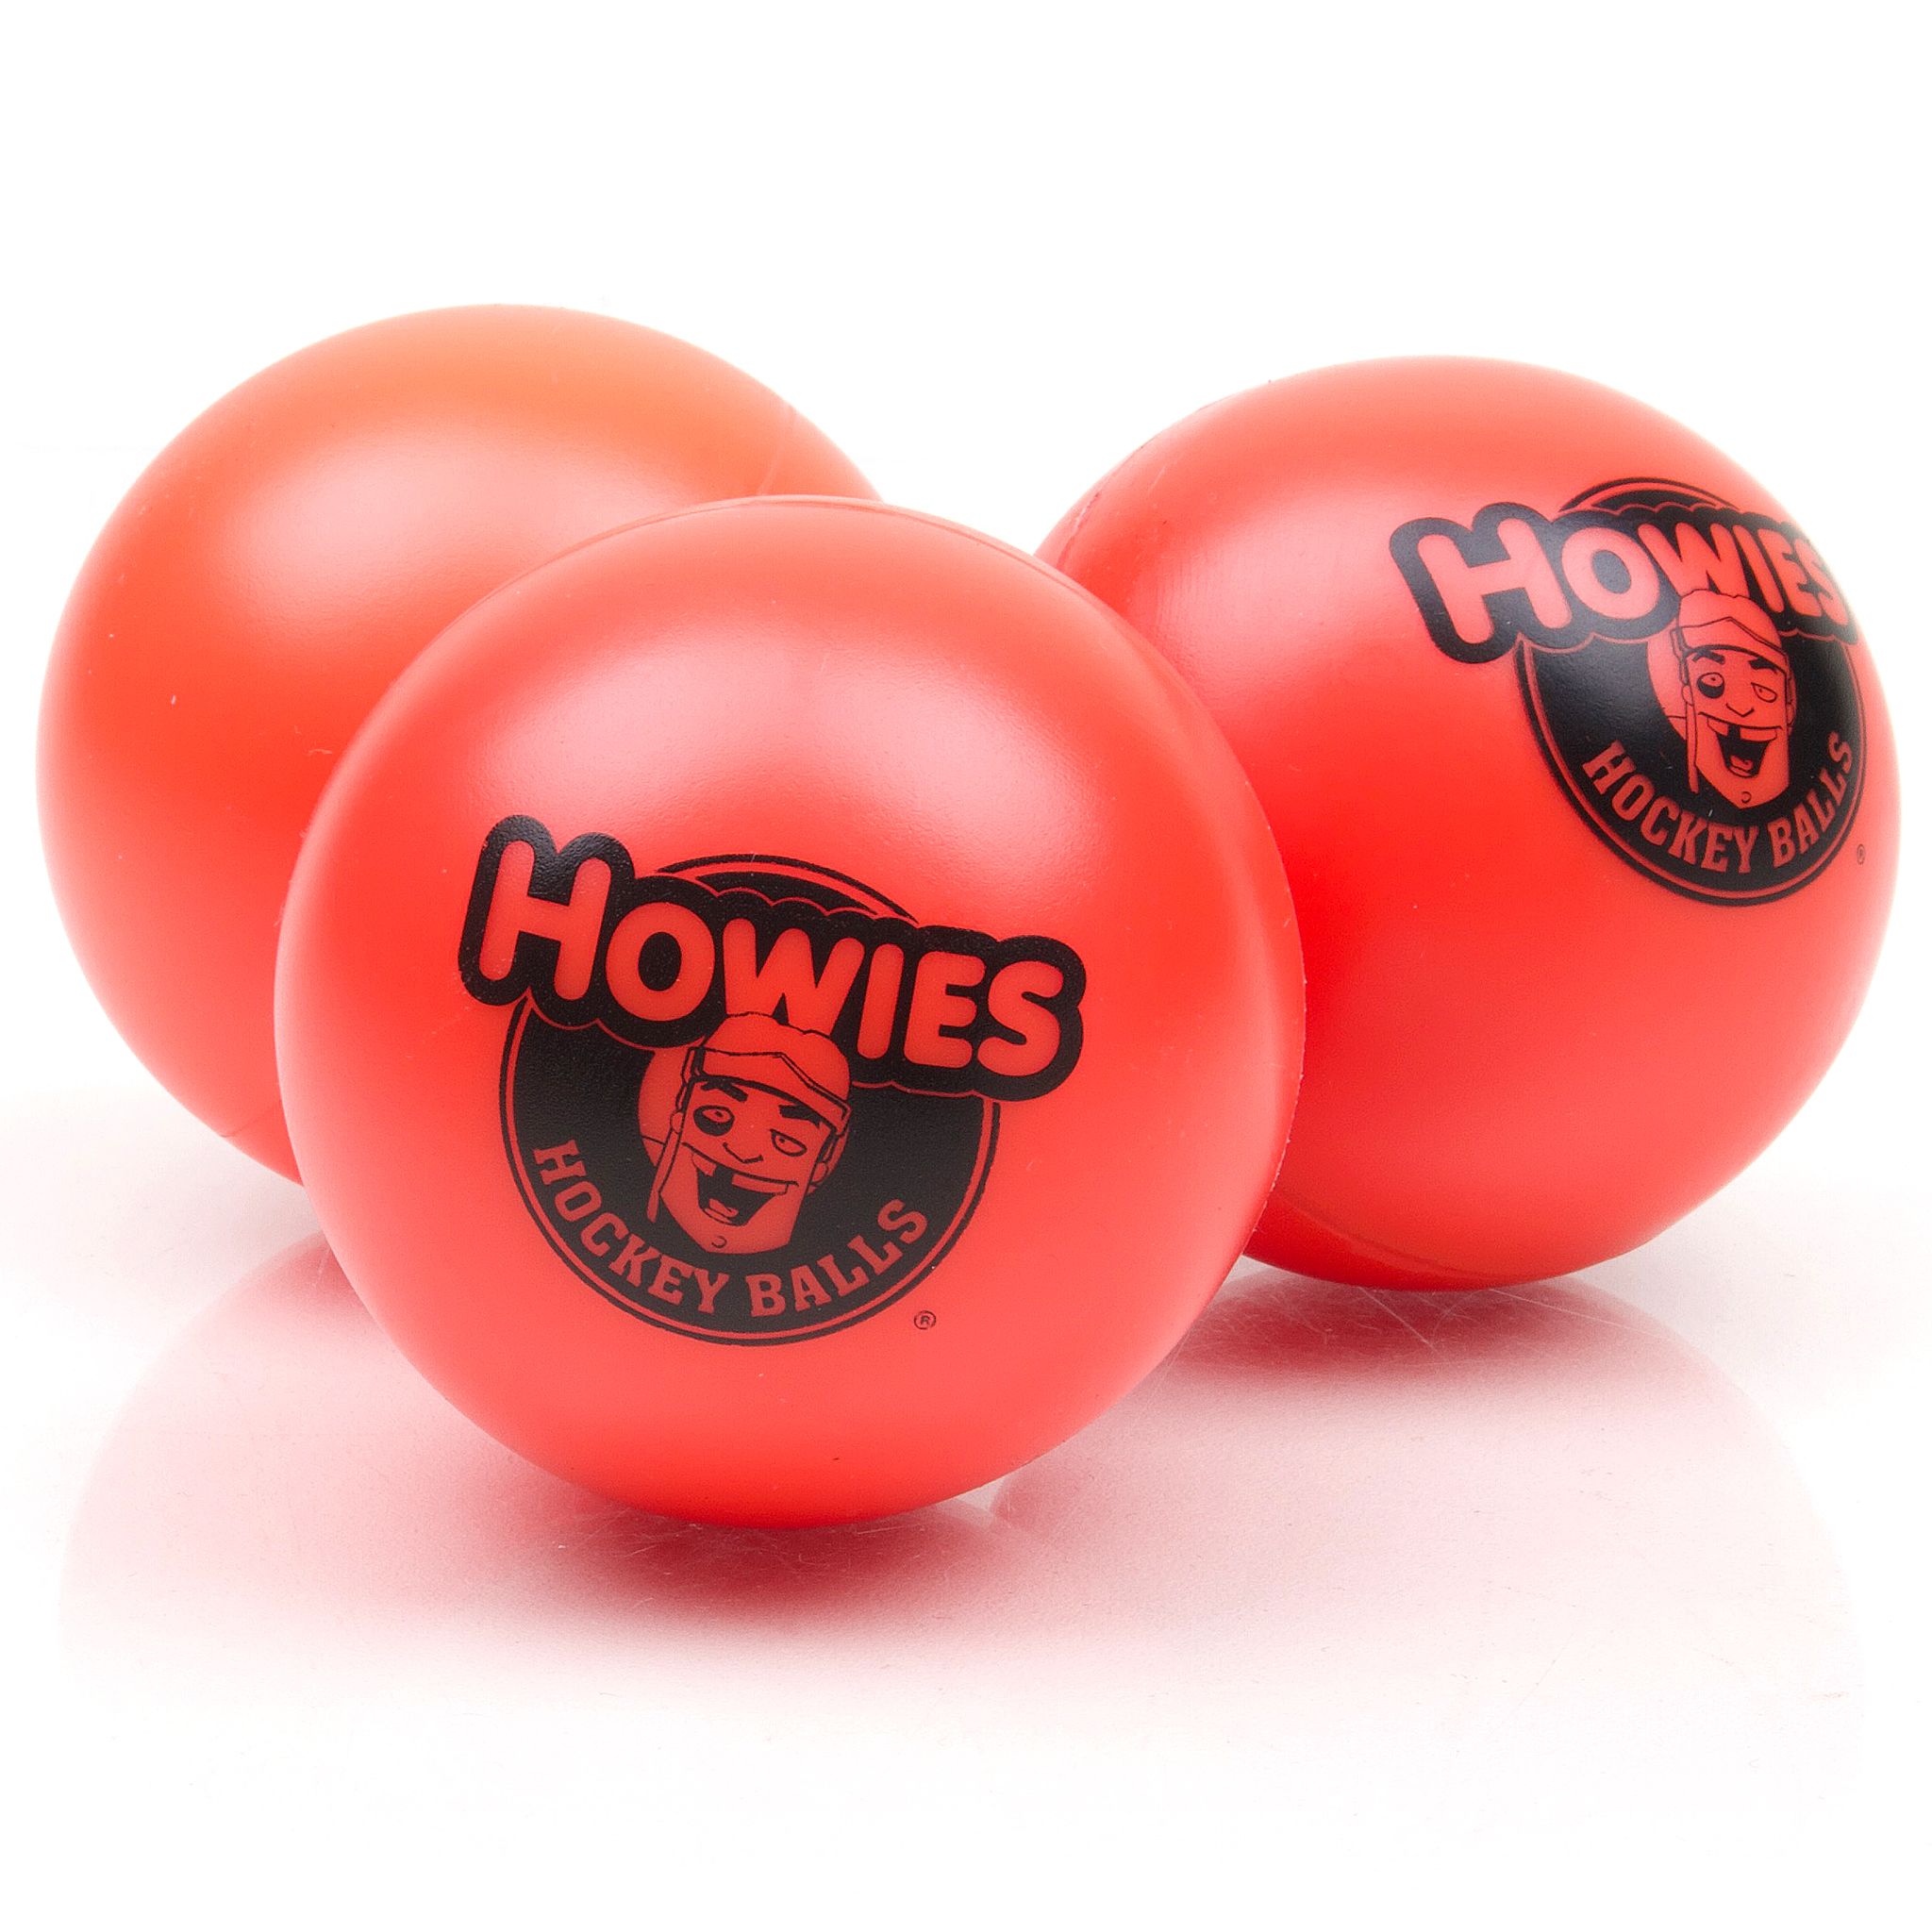 Howies Hockey Balls (10 Pack)